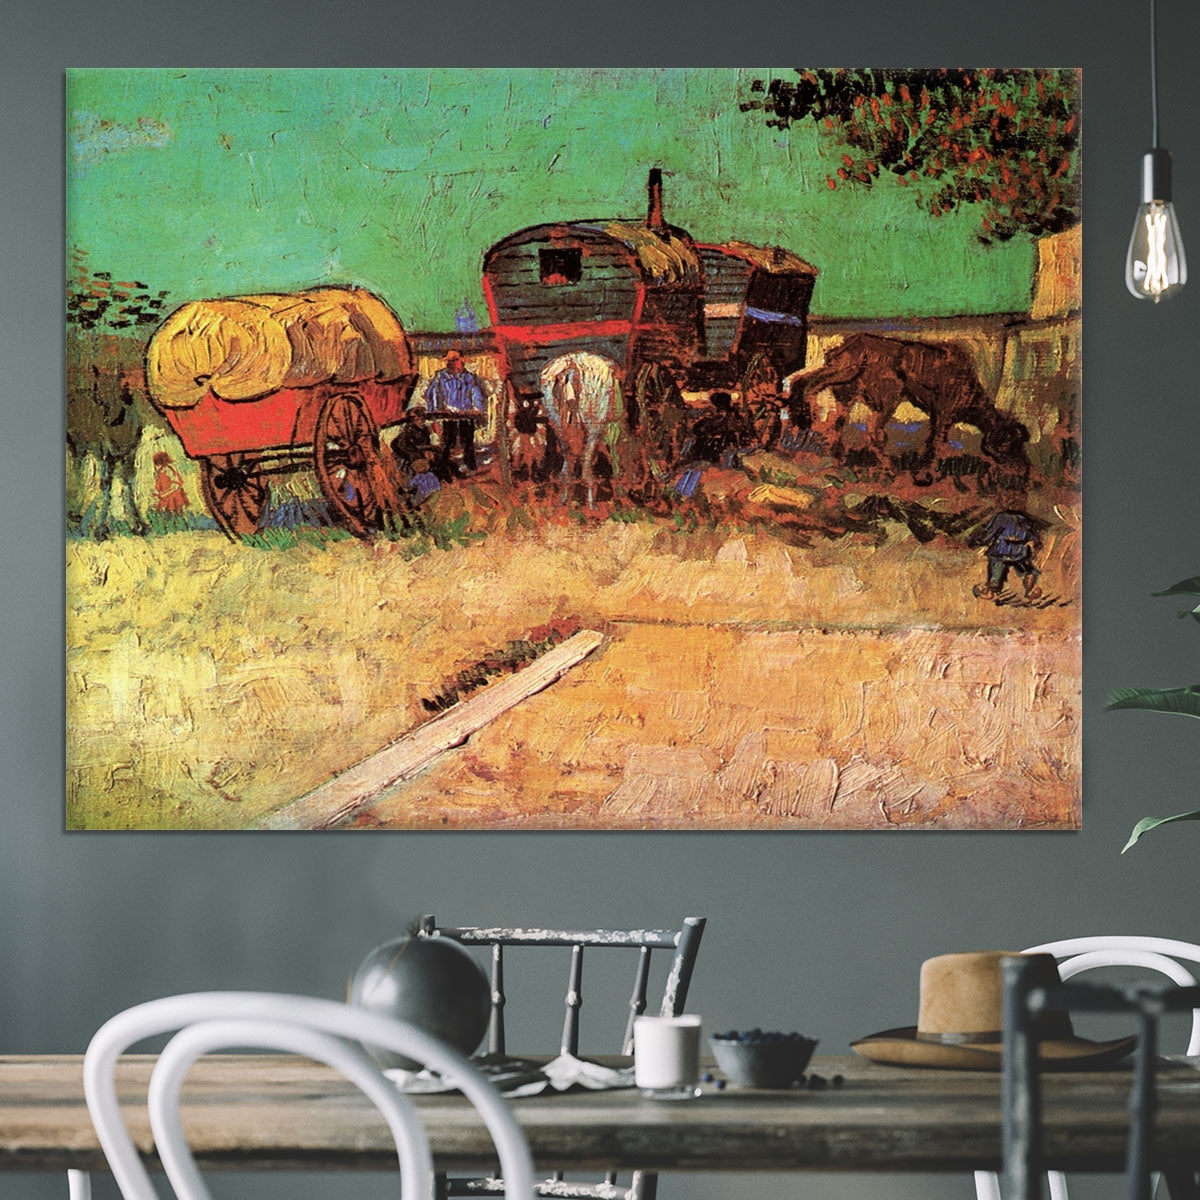 Encampment of Gypsies with Caravans by Van Gogh Canvas Print or Poster - Canvas Art Rocks - 3